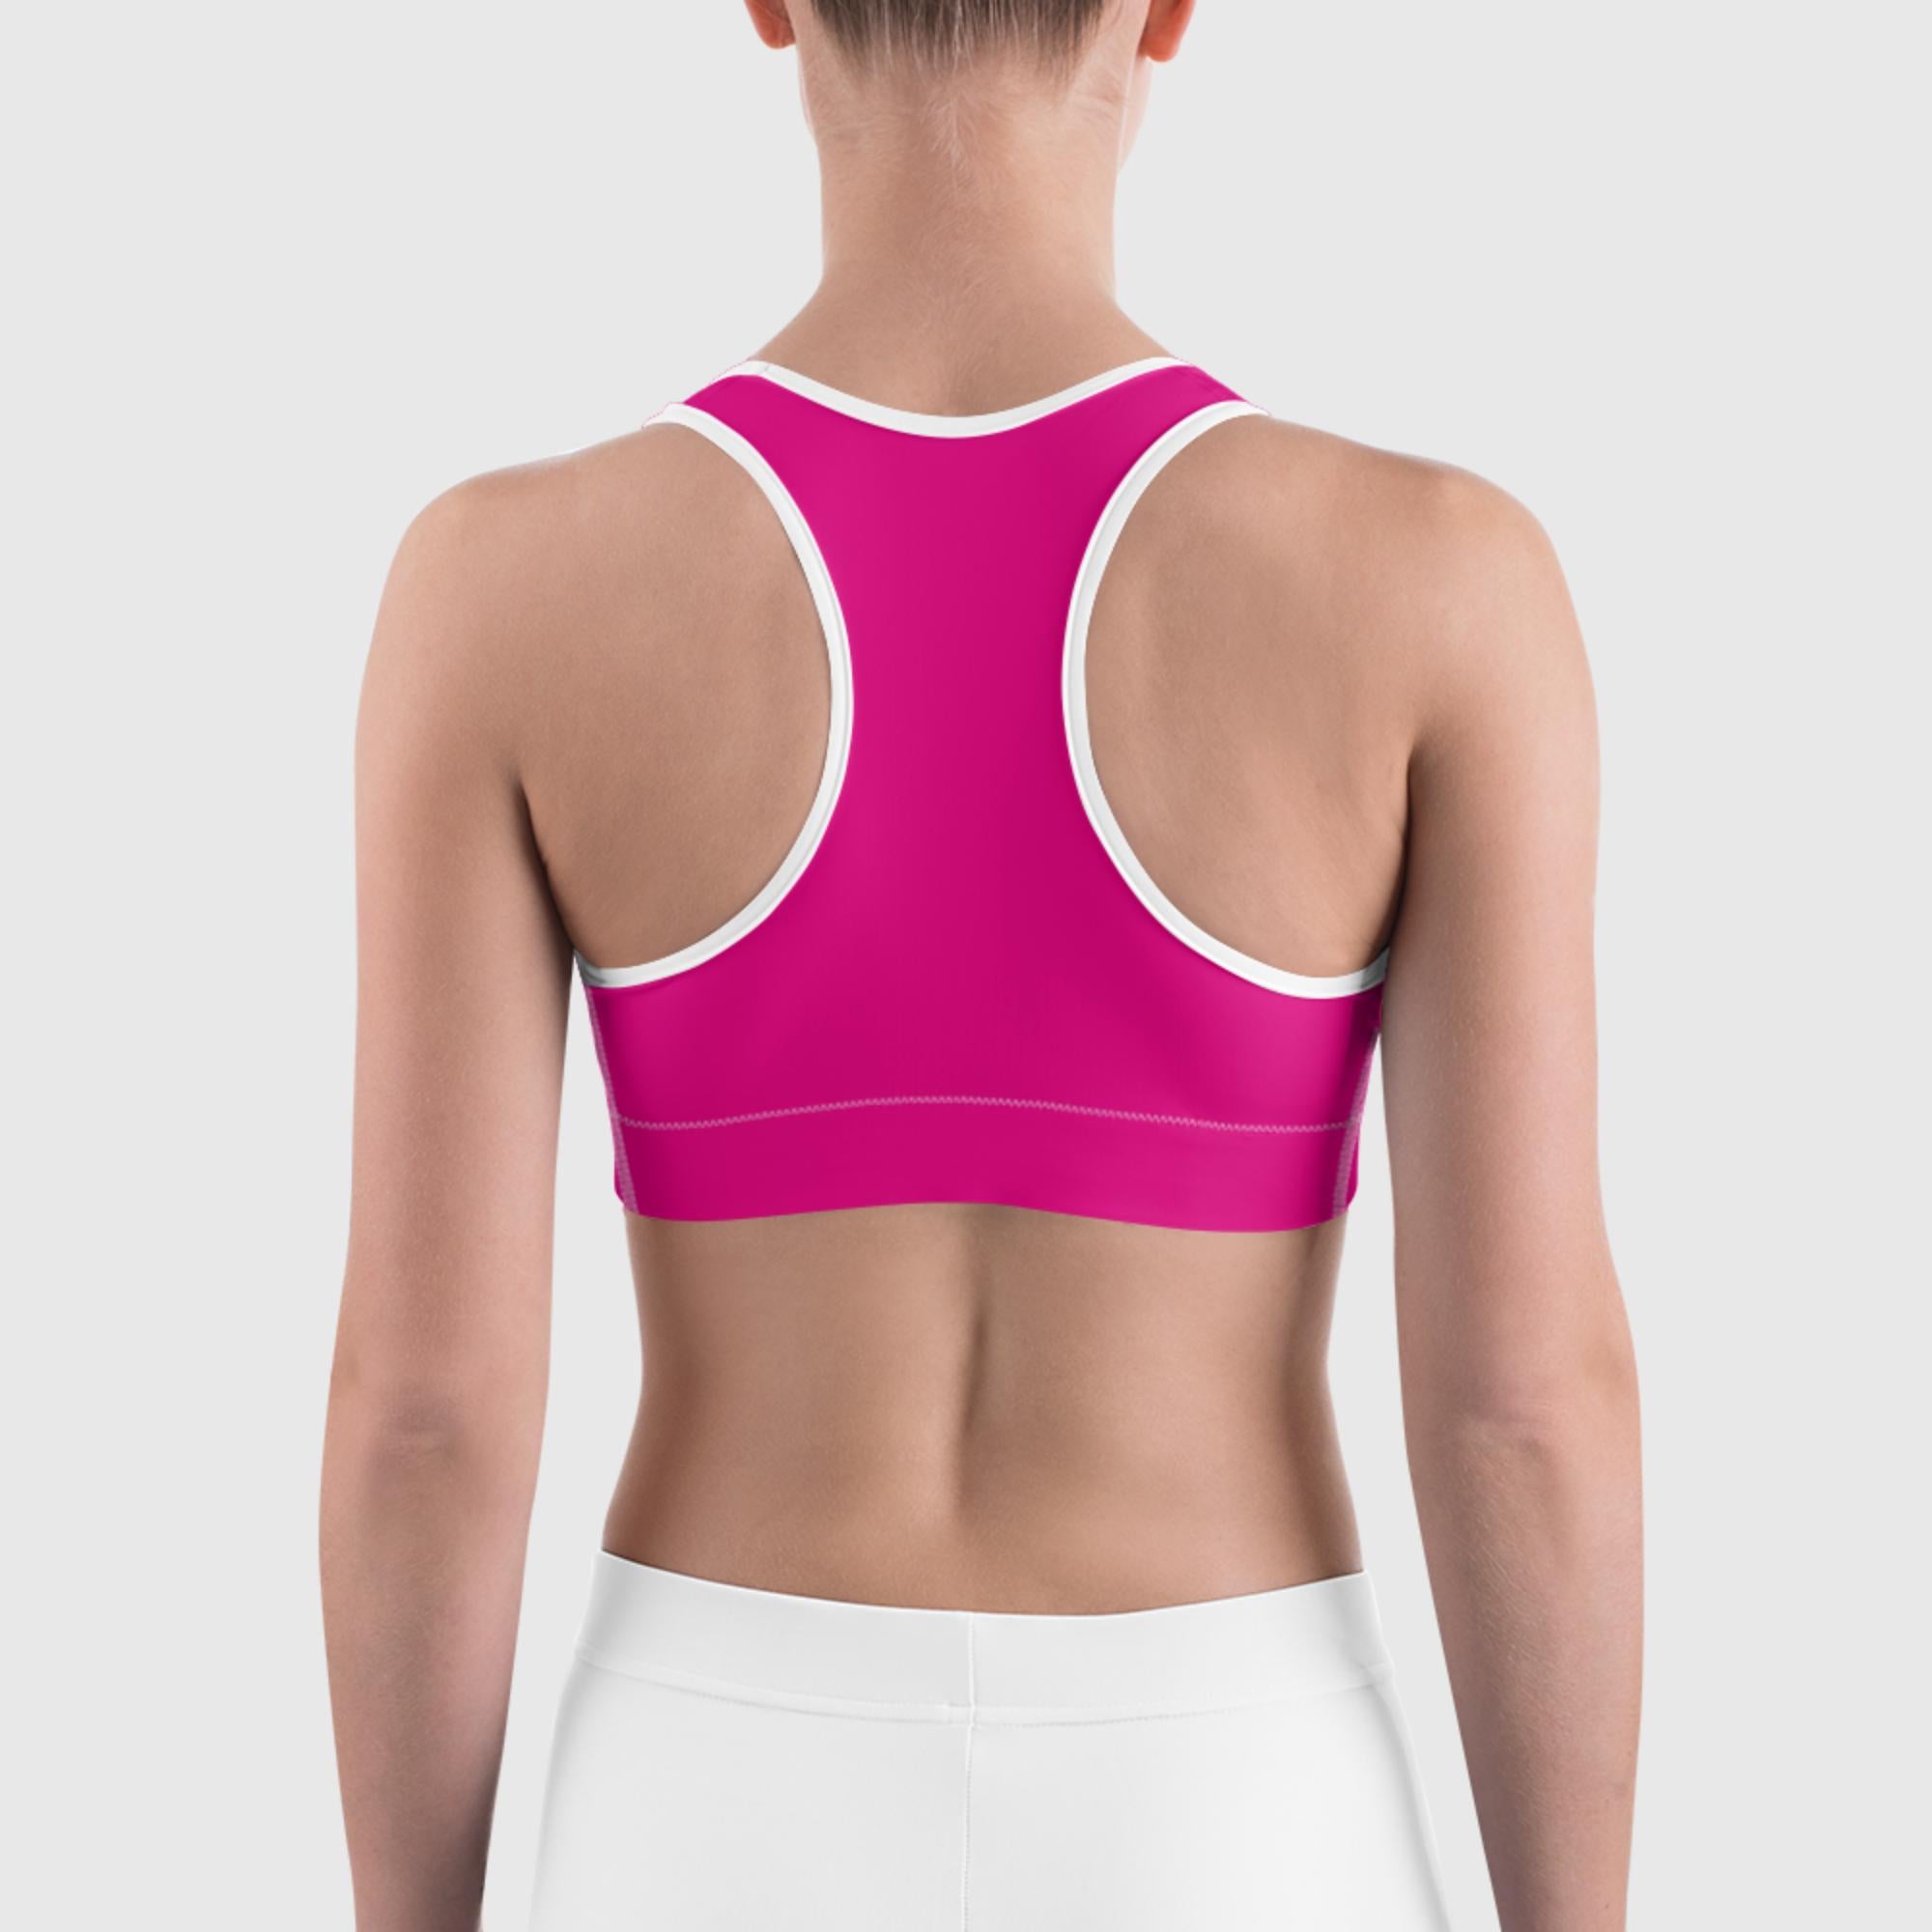 Sports Bra - Medium Pink - Sunset Harbor Clothing